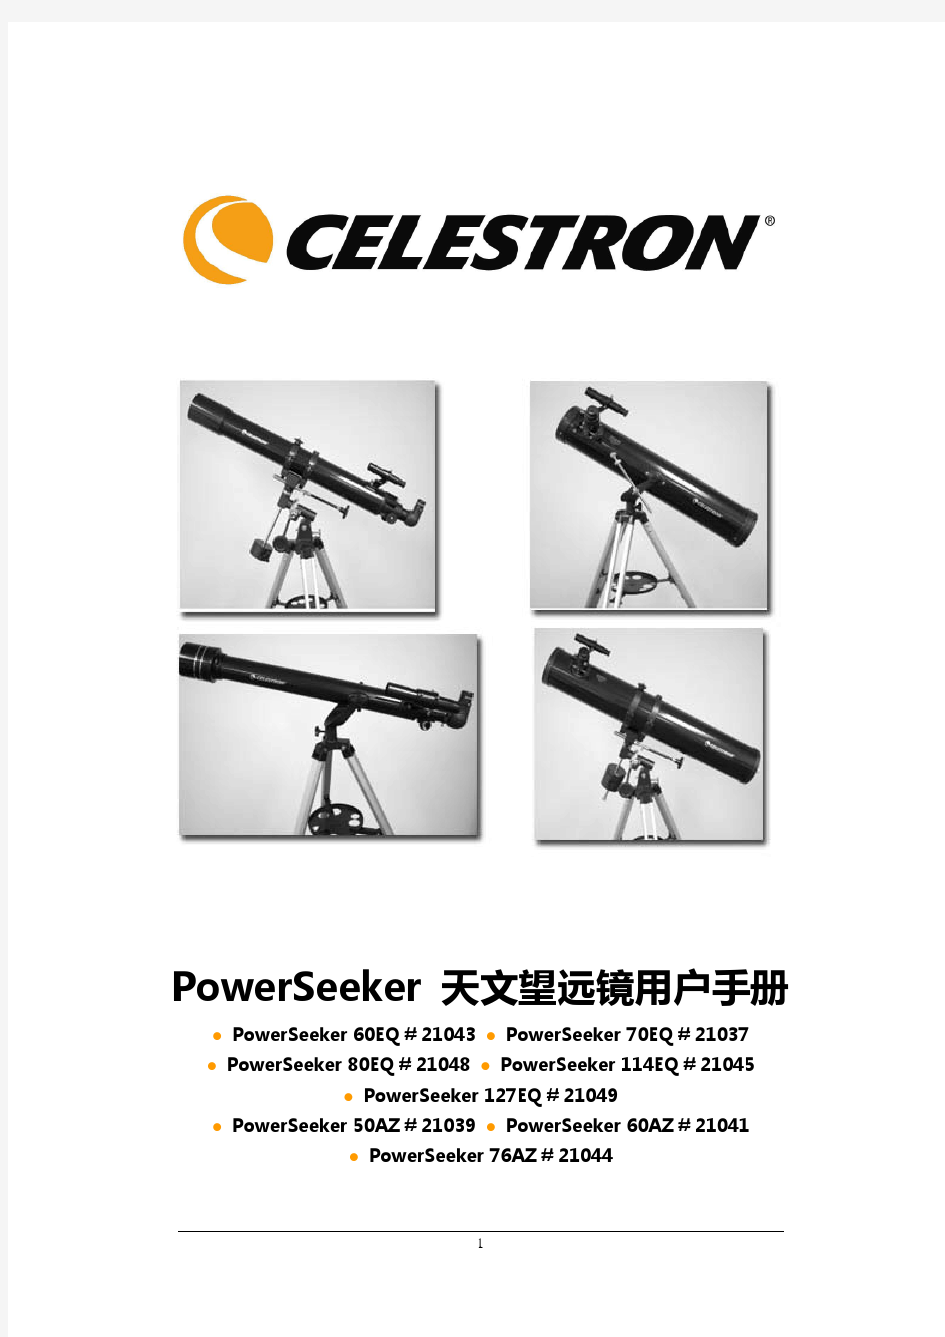 POWERSEEKER全系列天文望远镜中文说明书